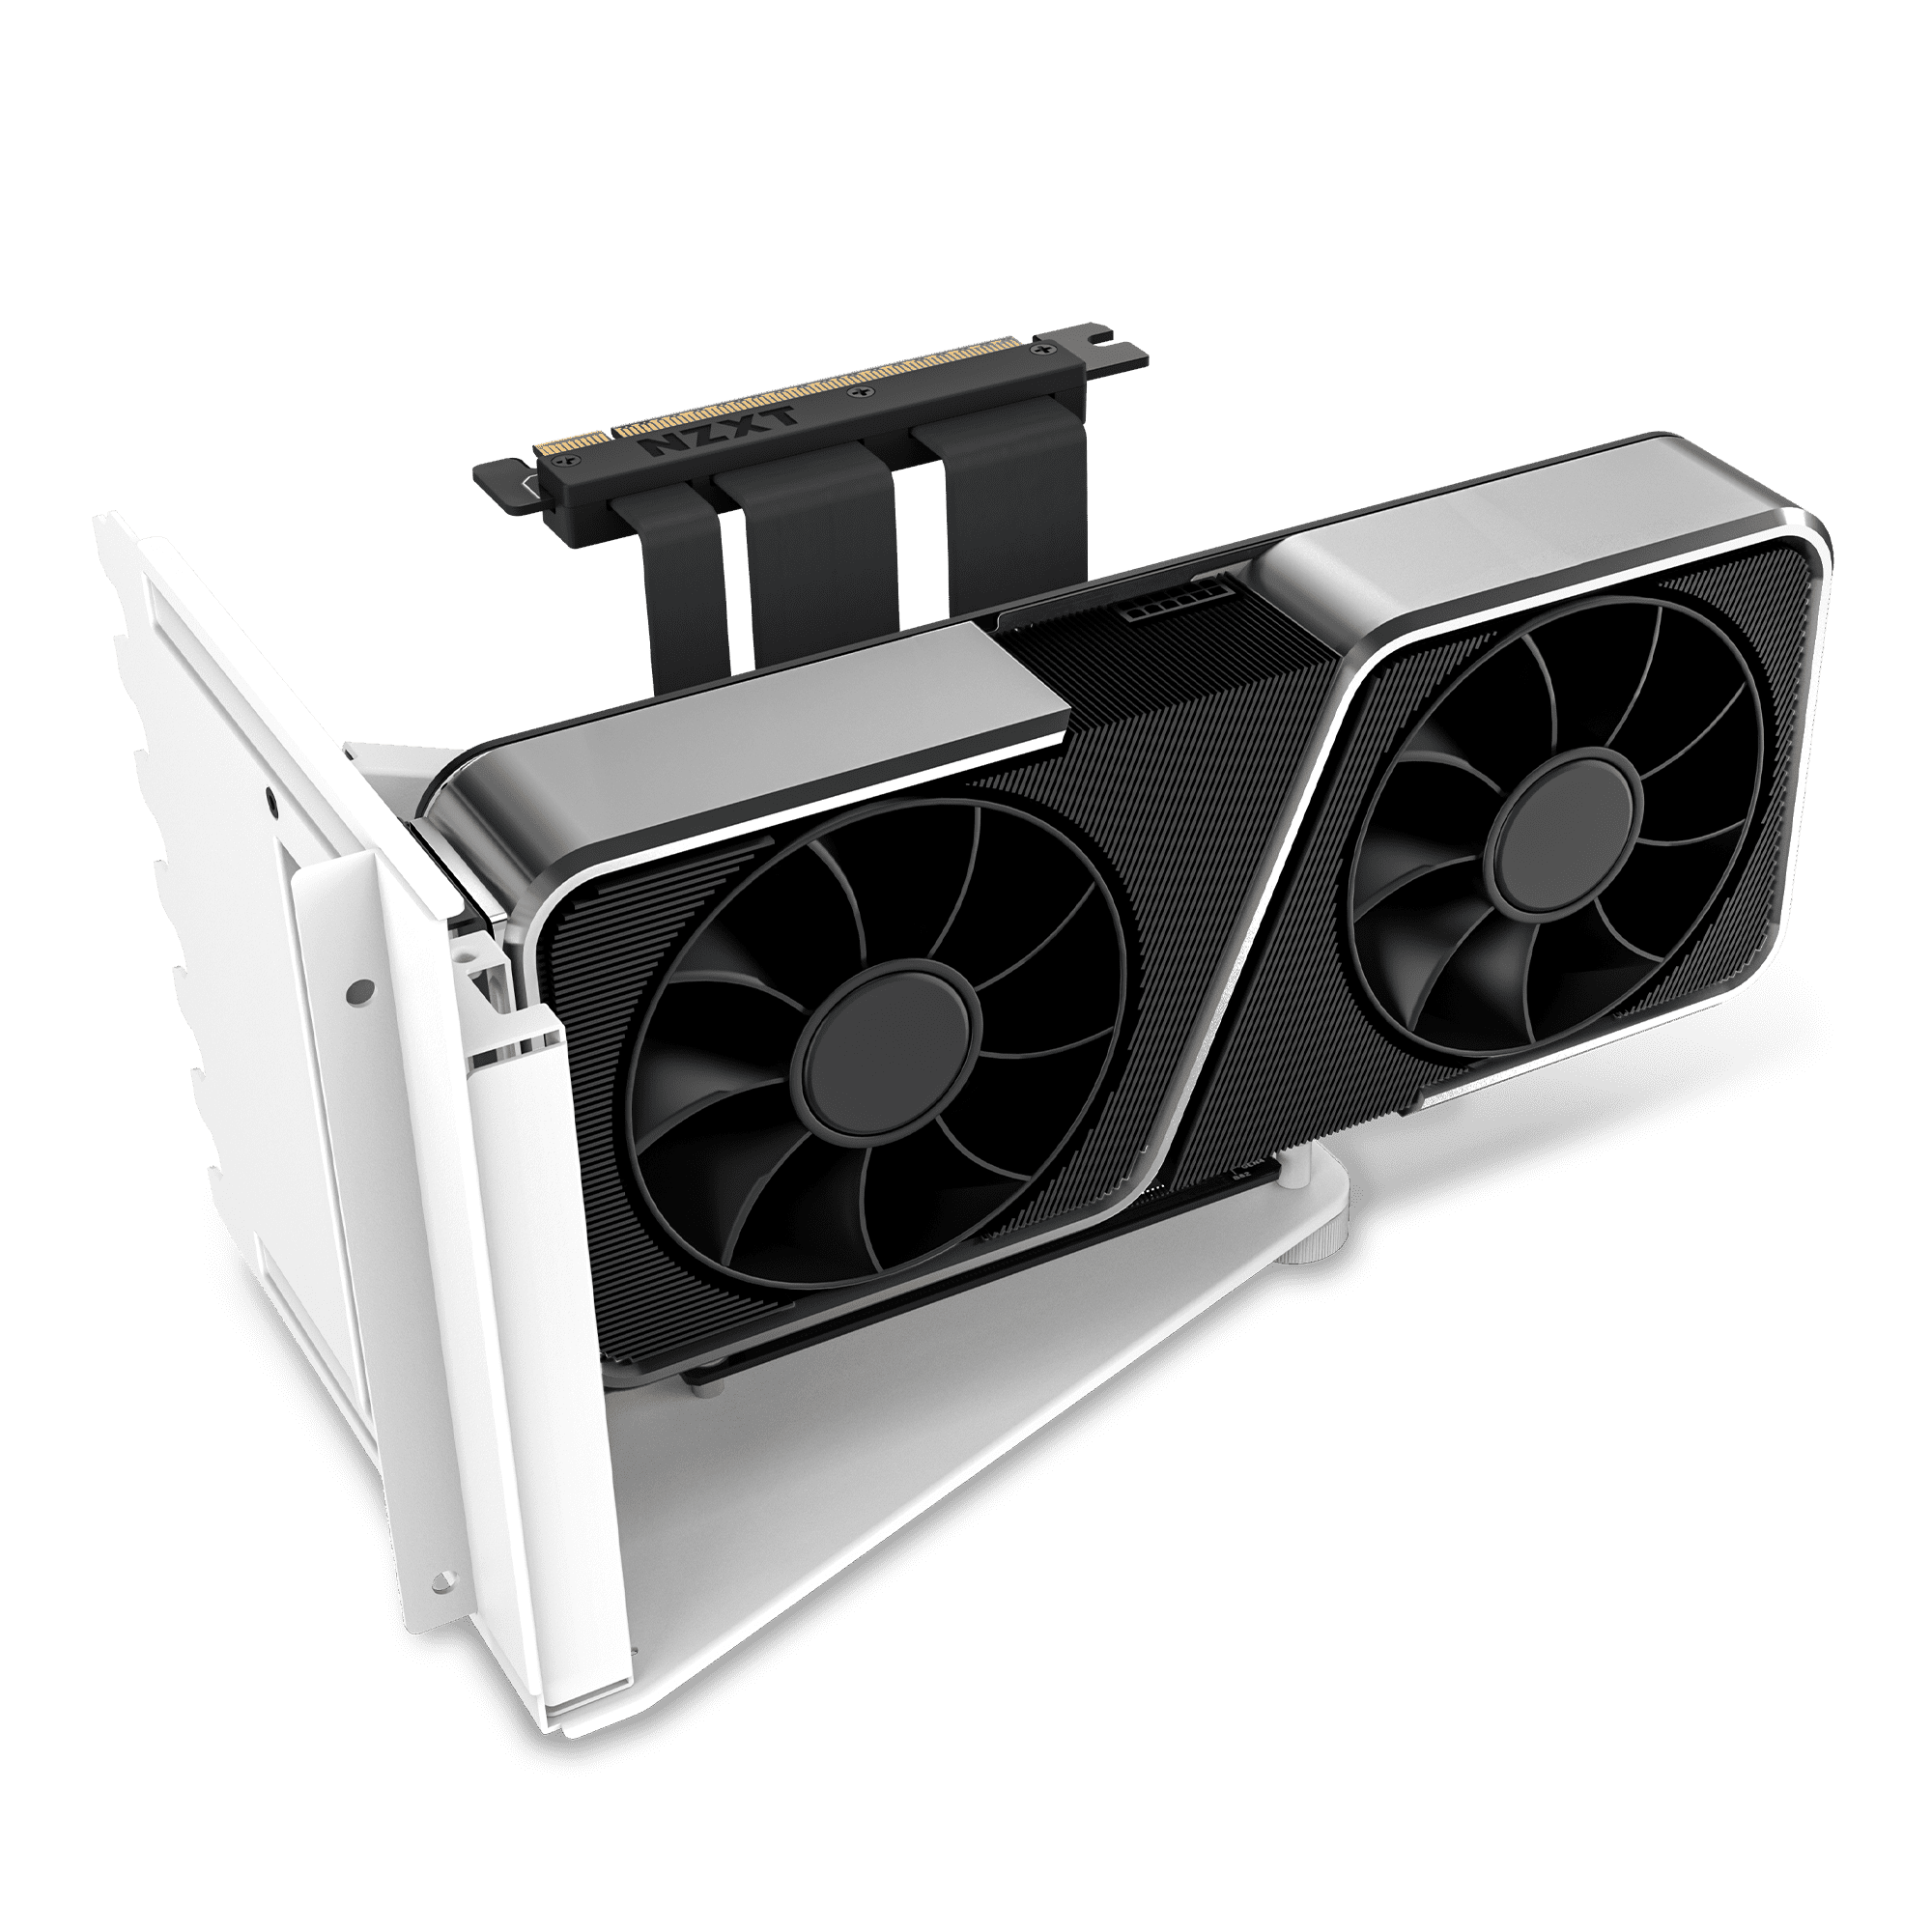 NZXT H510 ELITE GPU BRACKET SUPPORT MOUNT ELITE